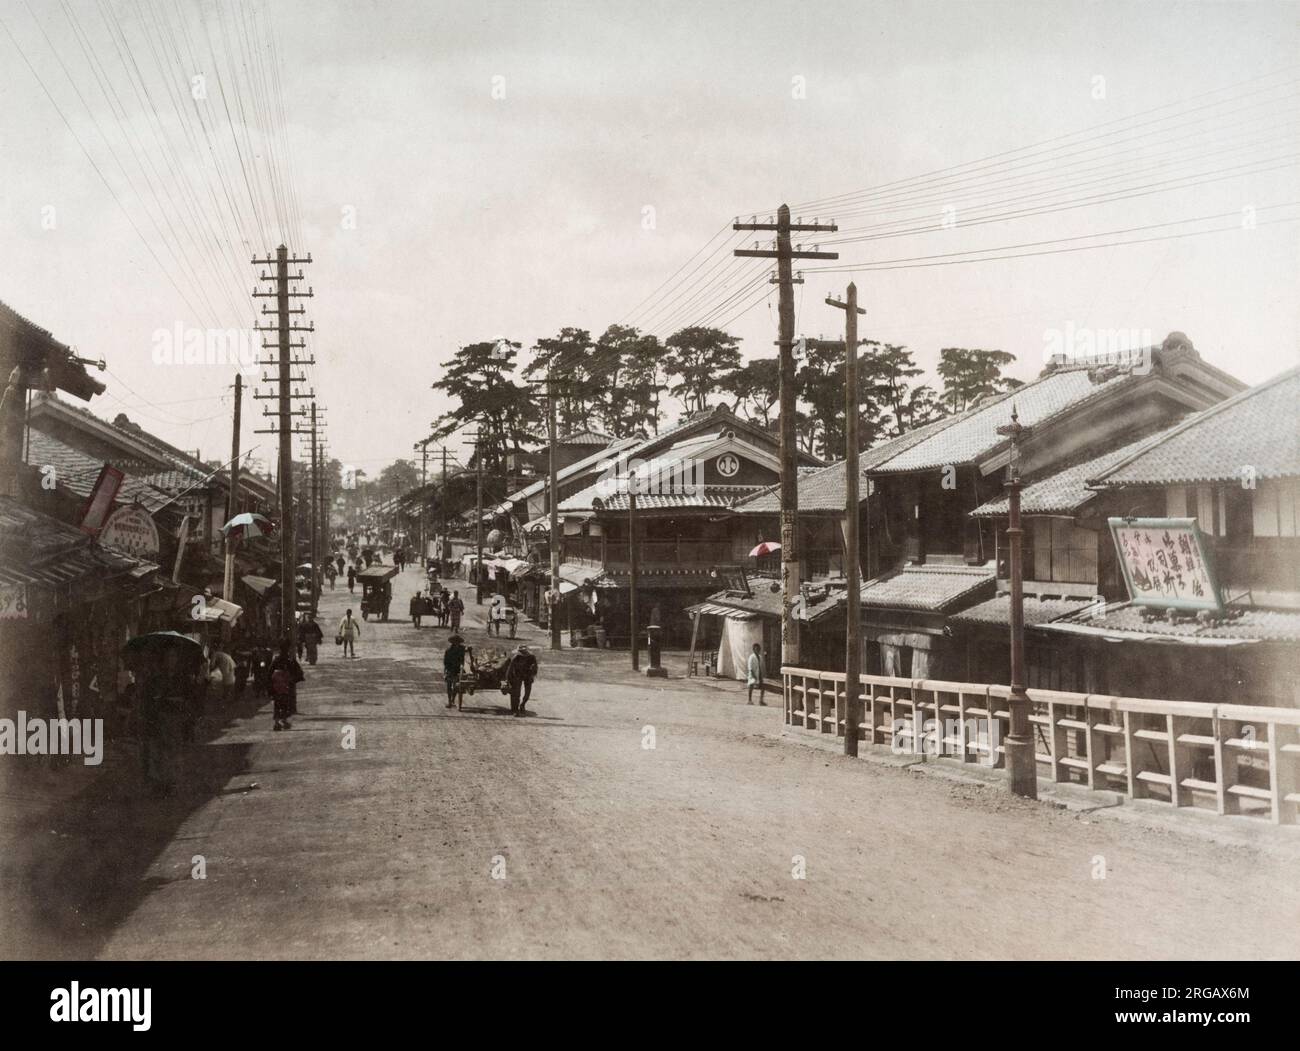 Vintage-Fotografie des 19. Jahrhunderts - Tamondori, Stroe-Szene im Zentrum von Kobe, Japan, Bild um 1880 Stockfoto